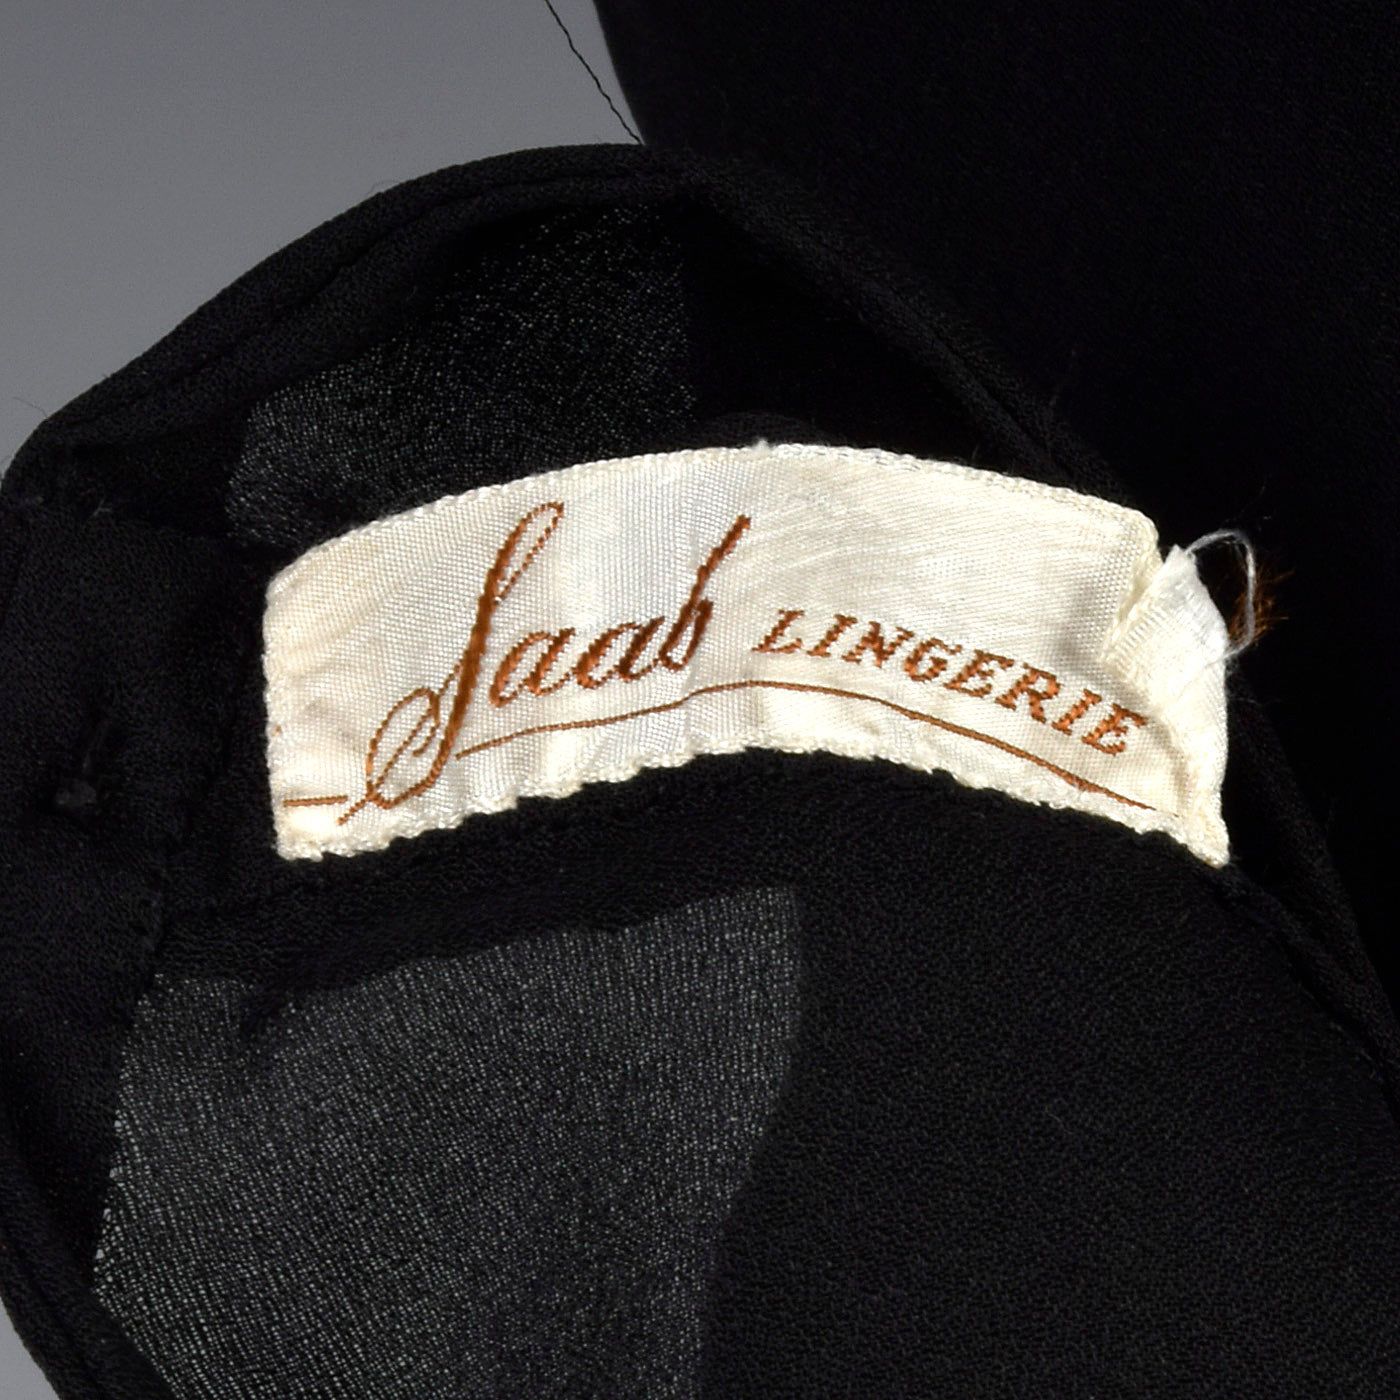 1940s Black Half Slip with Scalloped Sheer Lace Hem